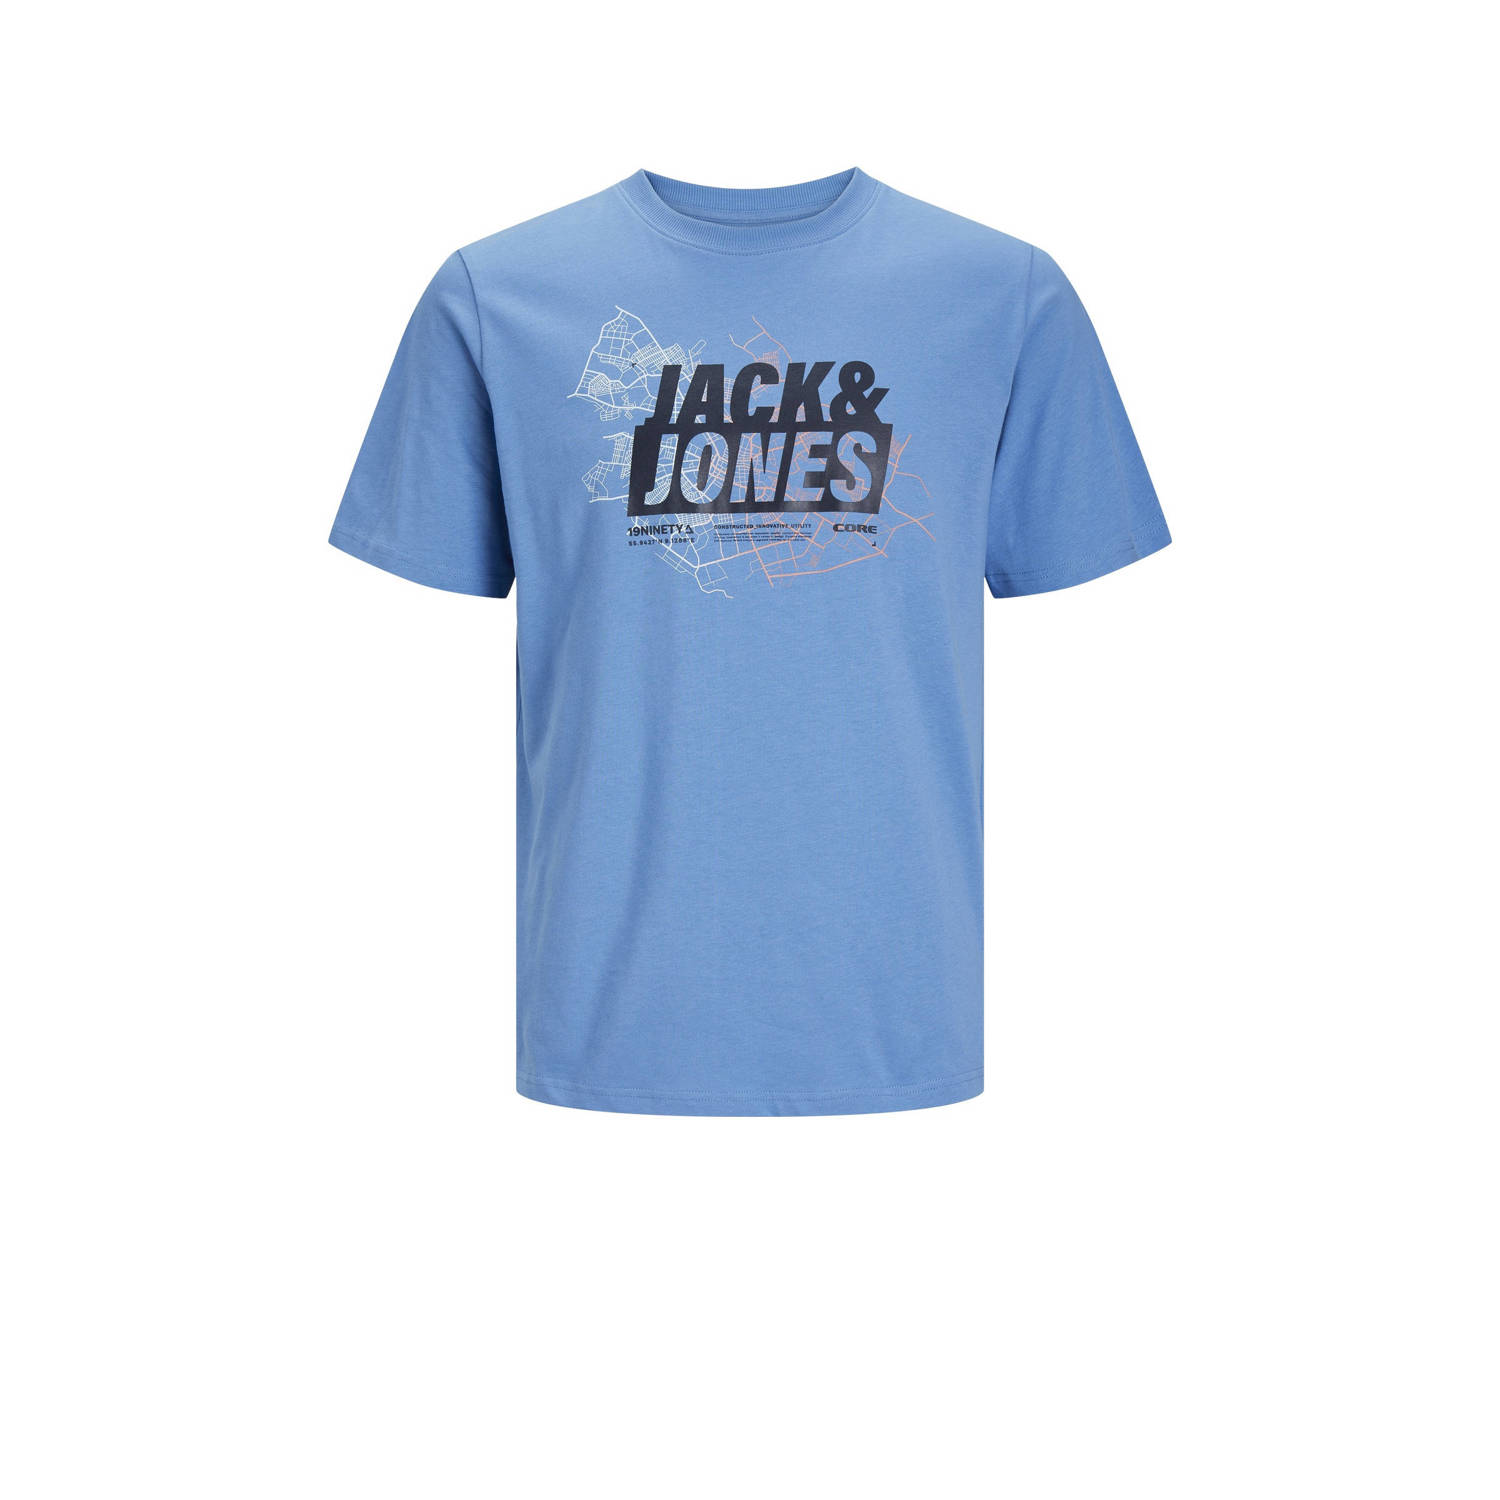 JACK & JONES CORE T-shirt JCOMAP met printopdruk pacific coast